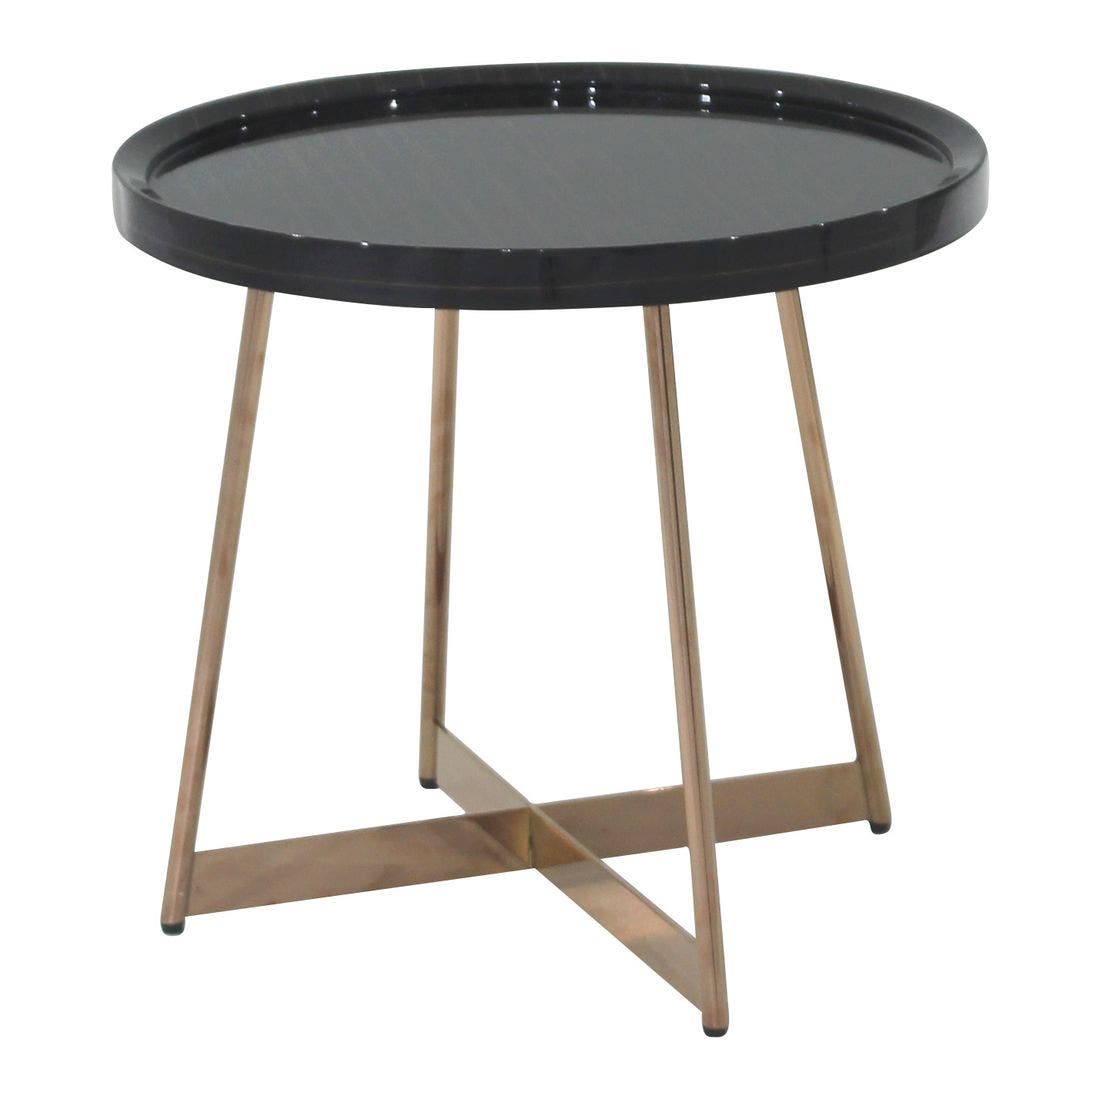 19155435-labia-furniture-living-room-end-table-01